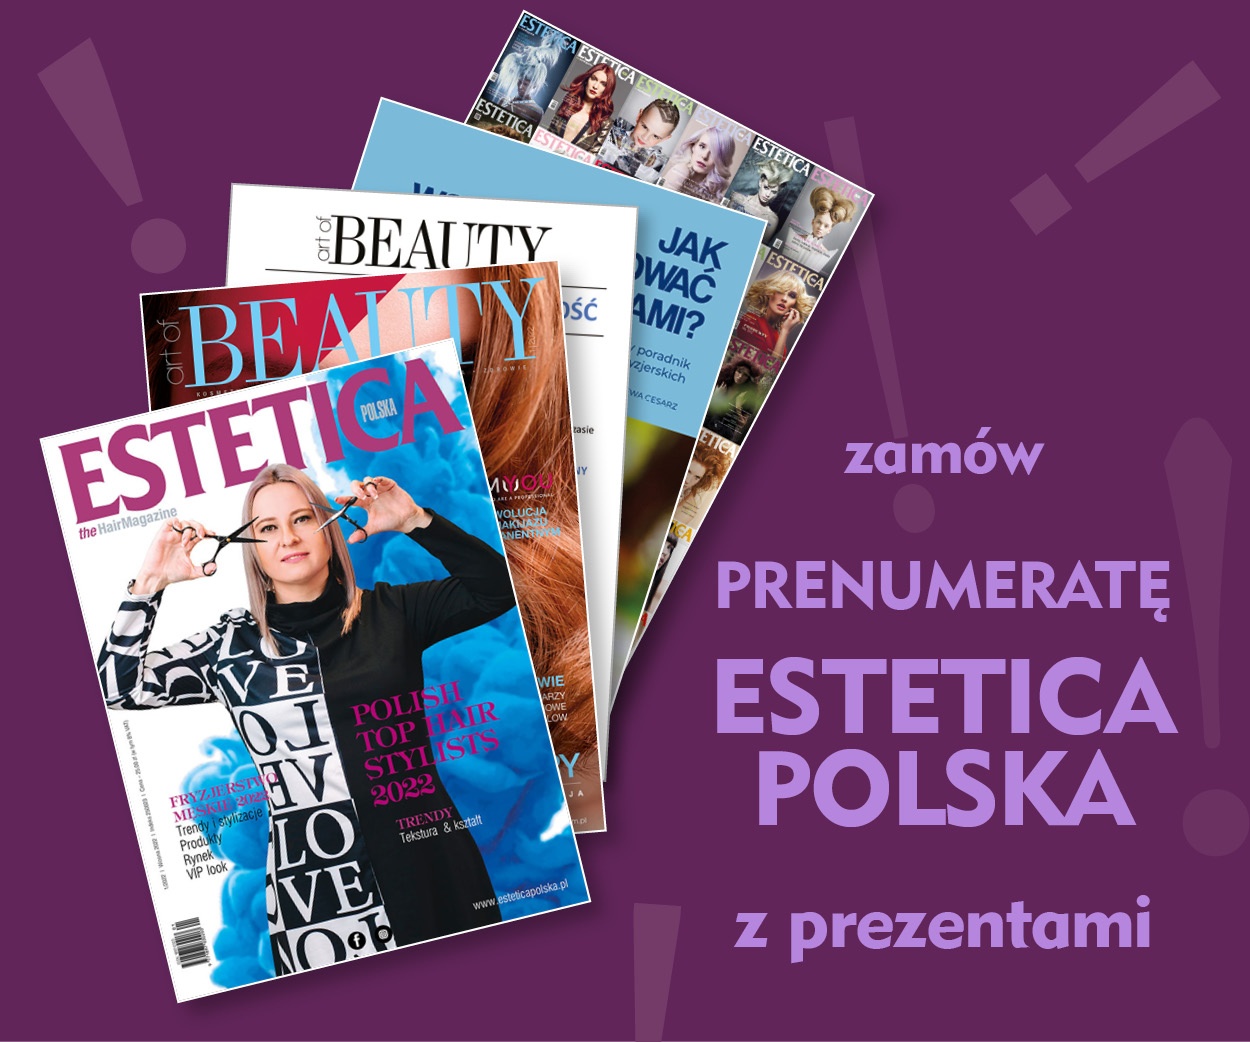 Prenumerata Estetica Polska w sklepie art of BEAUTY